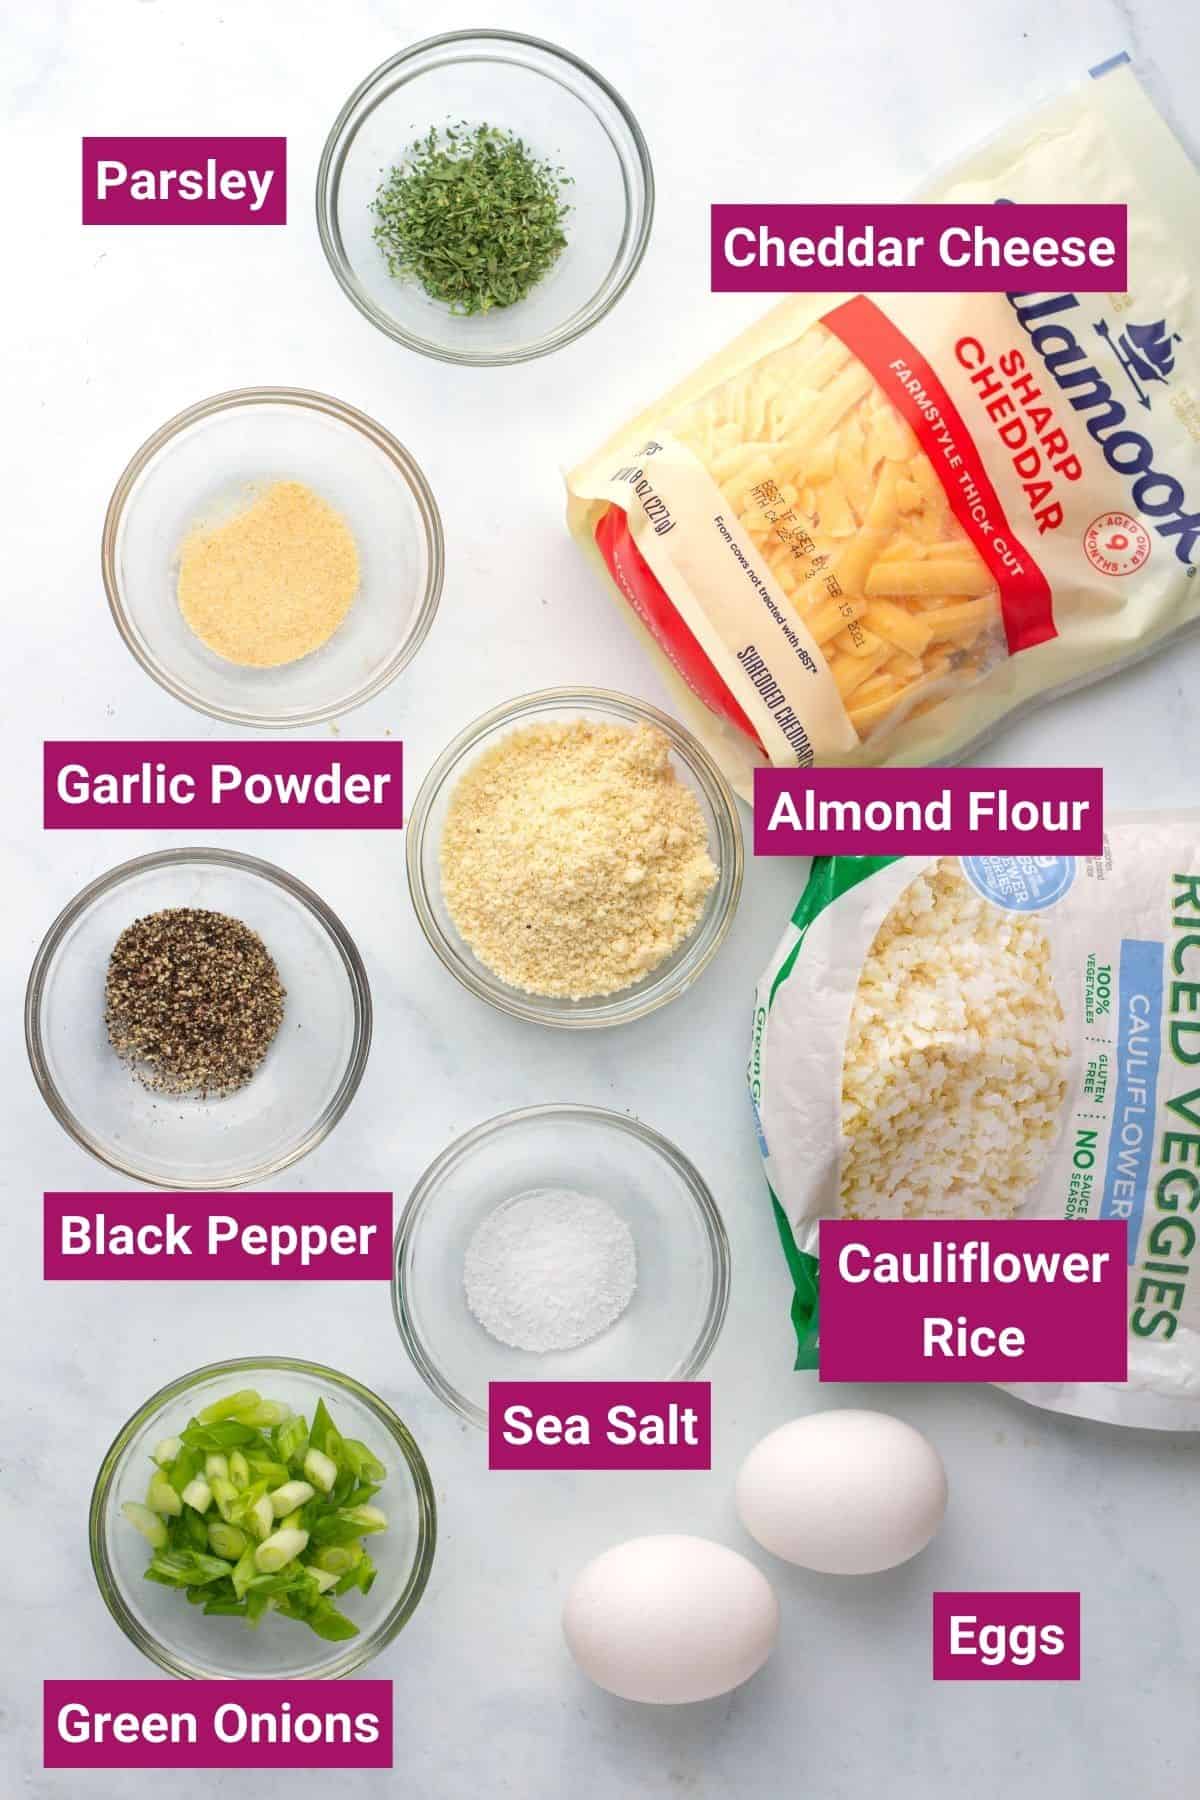 cheddar cheese, parsley, almond flour, garlic powder, black pepper, sea salt, green onions, eggs and cauliflower rice